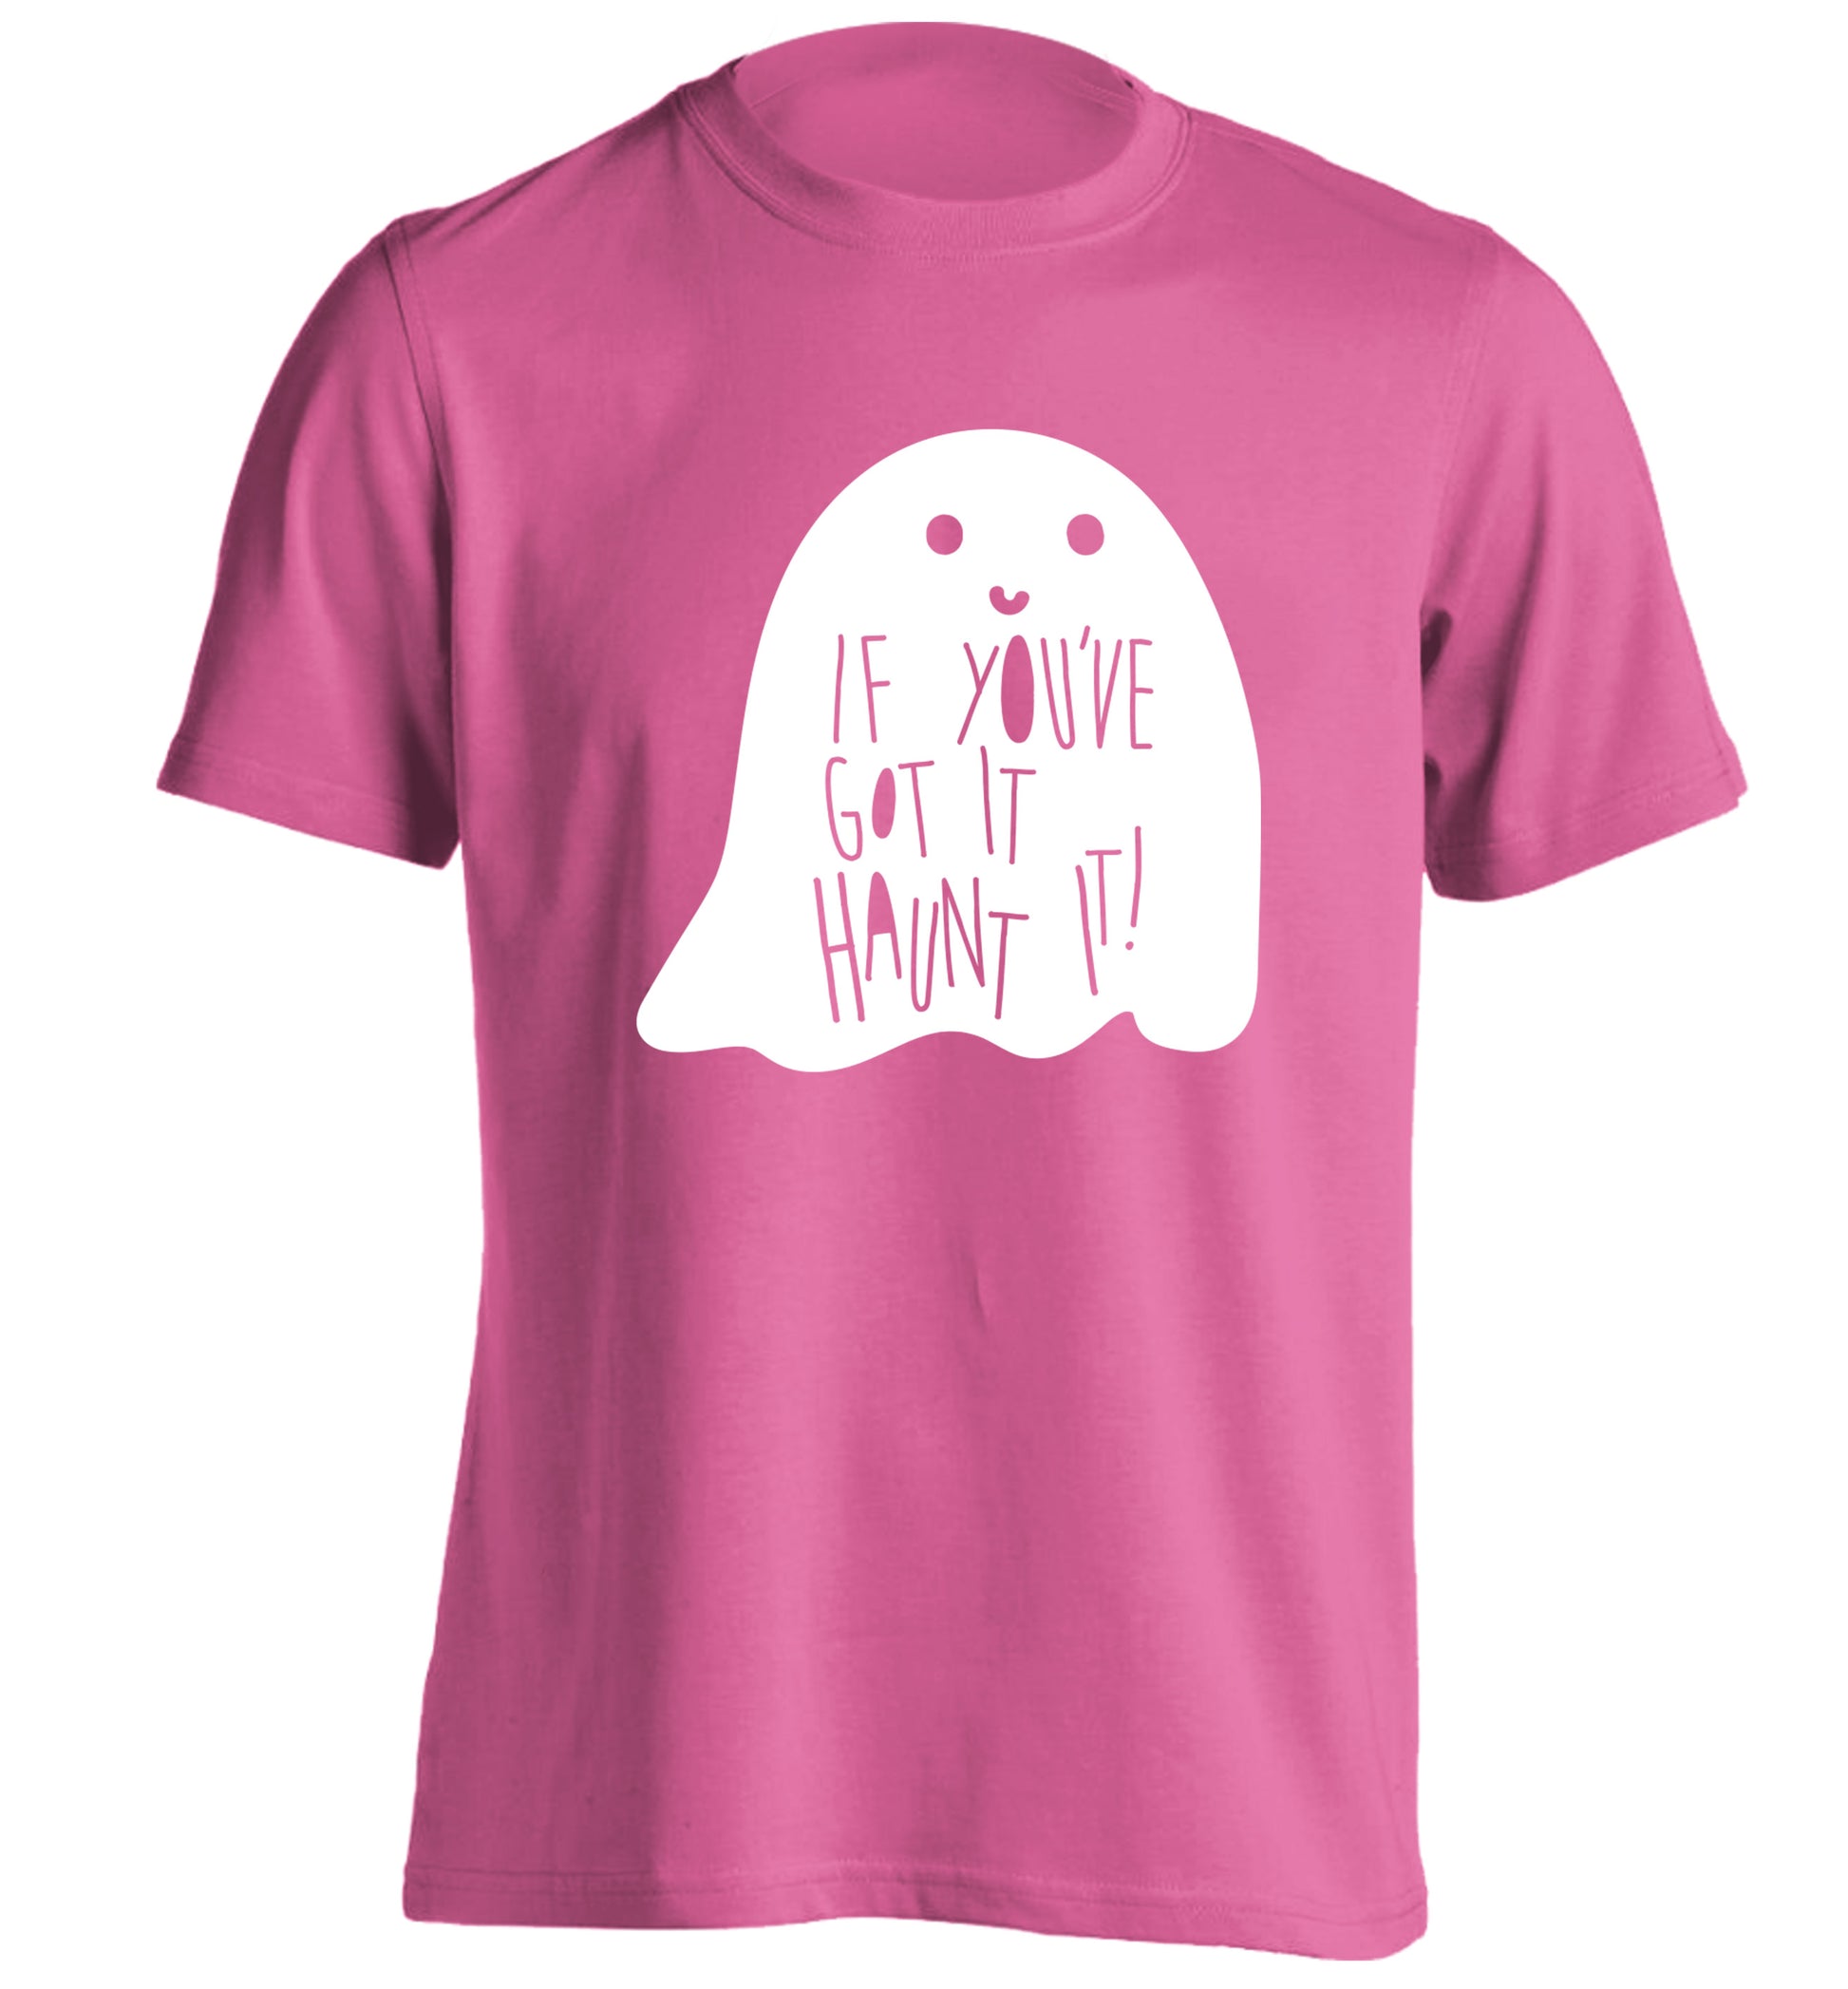 If you've got it haunt it adults unisex pink Tshirt 2XL